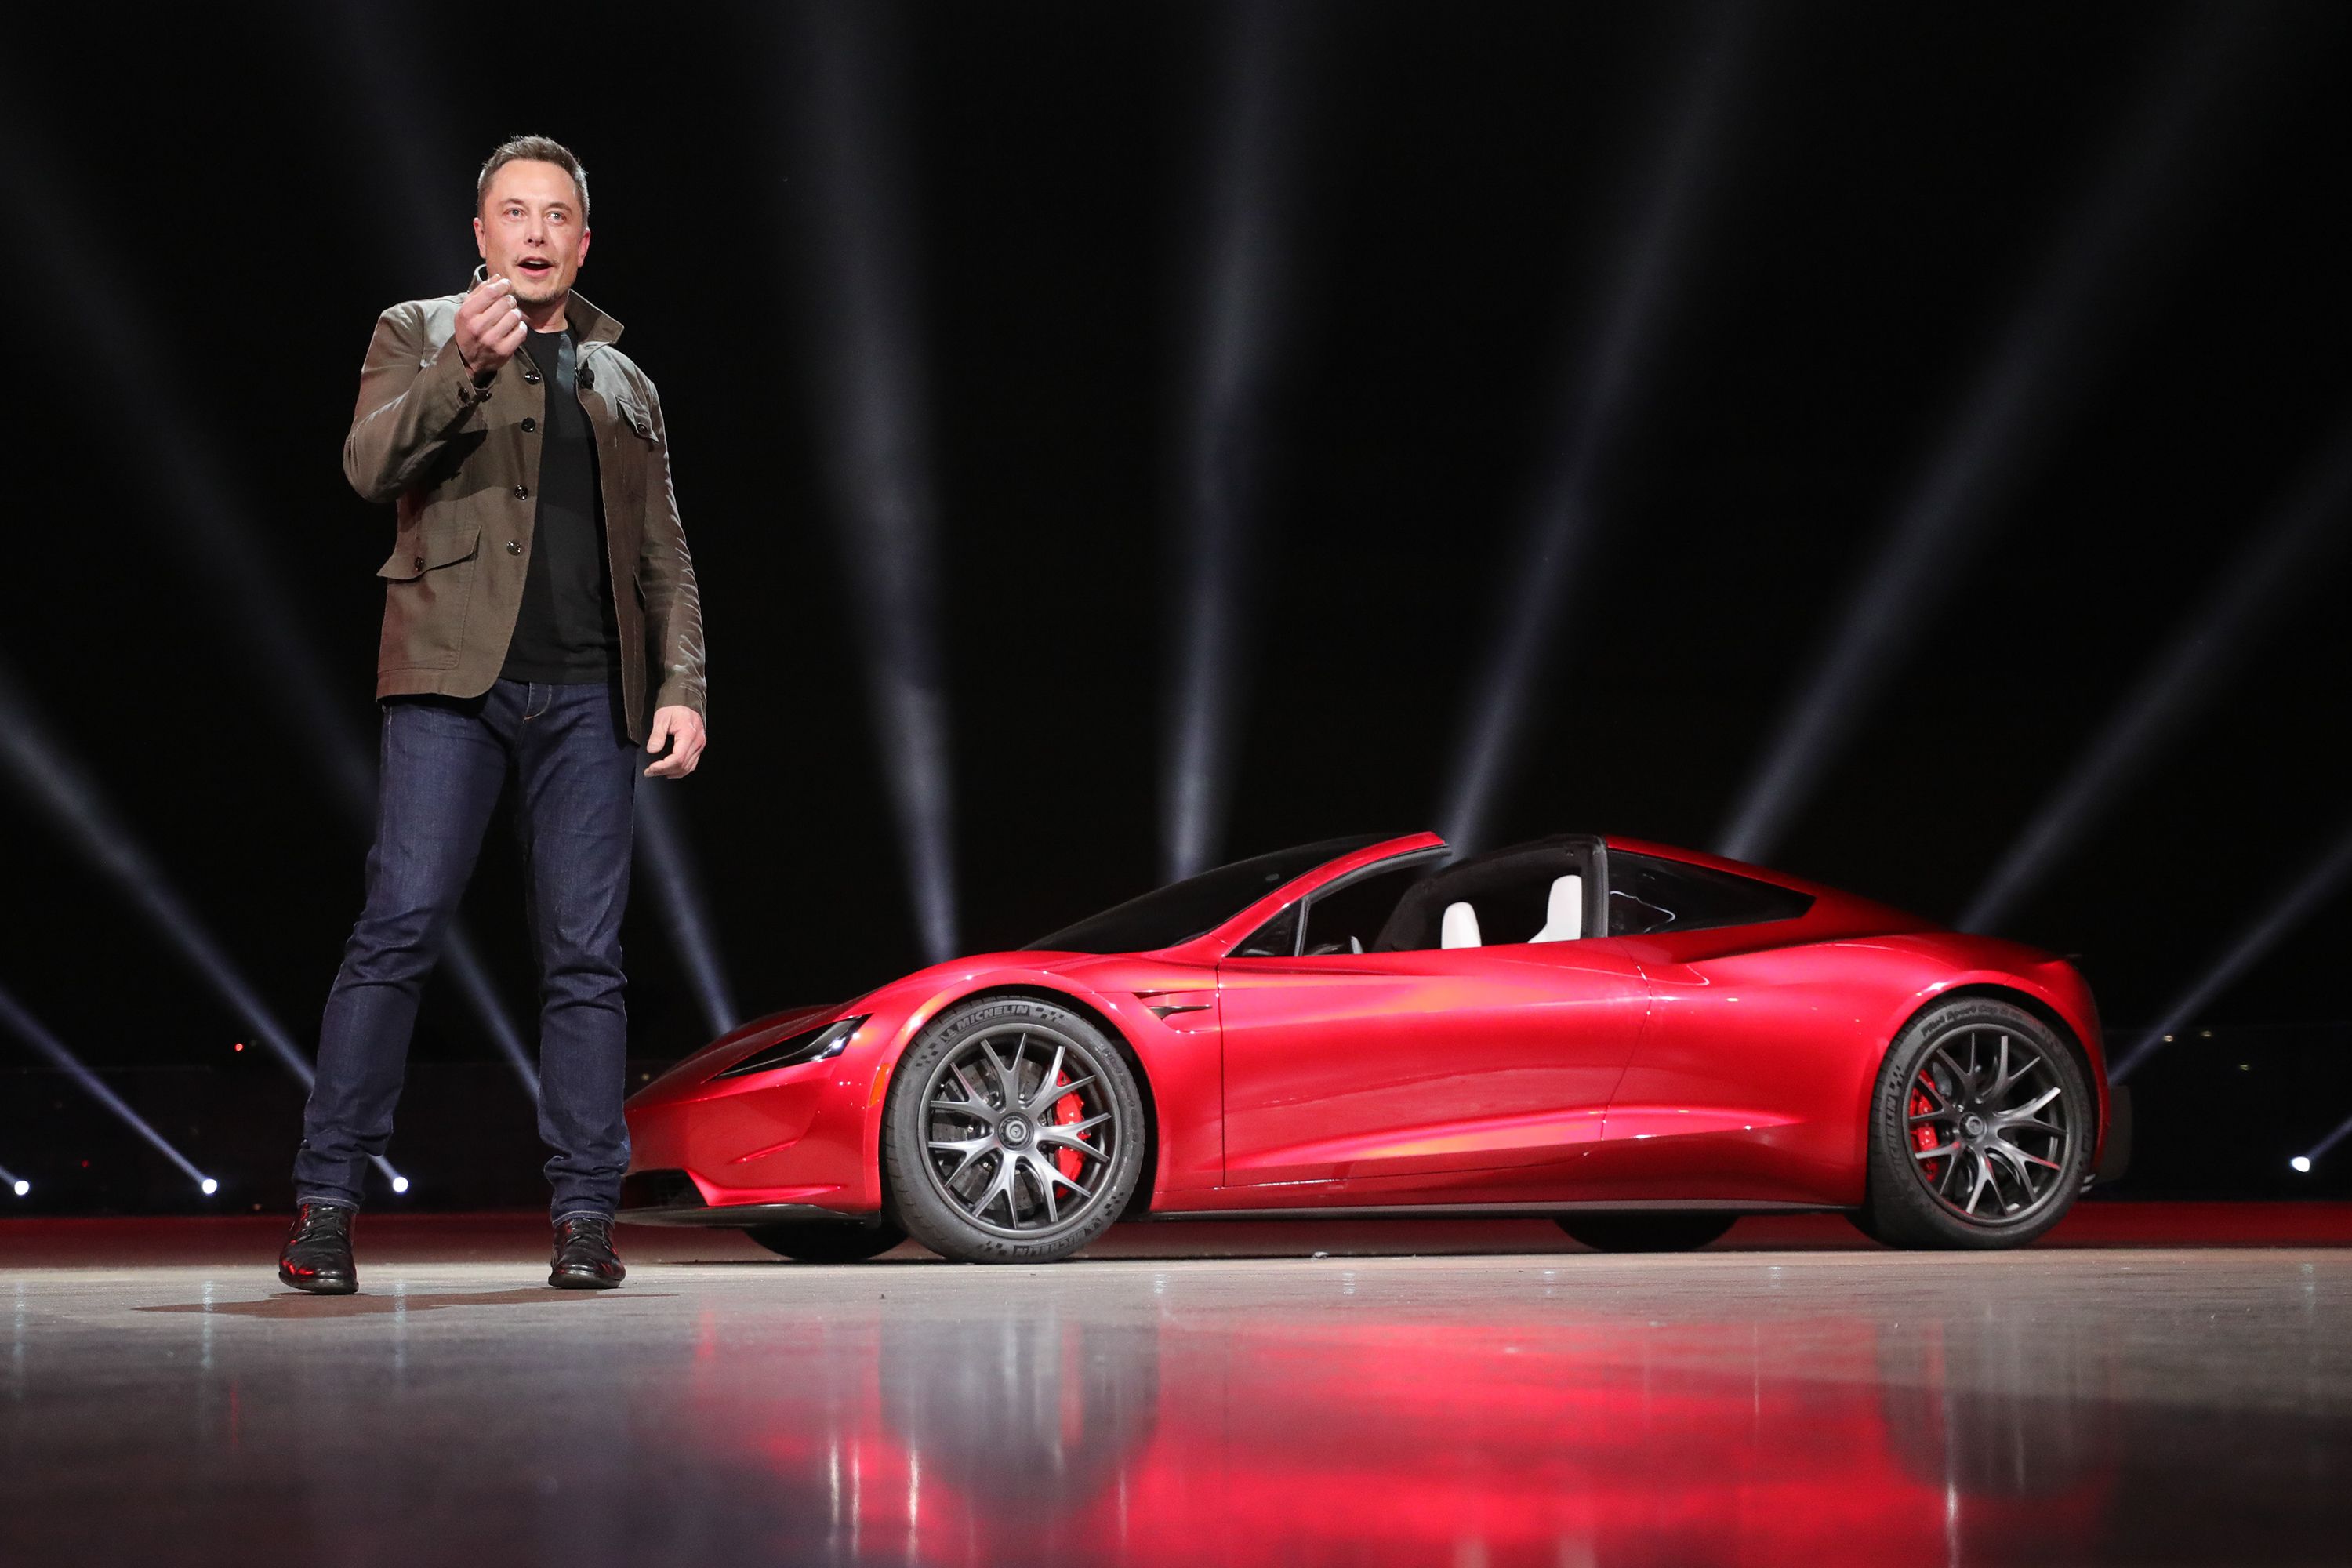 Elon Musk with the Tesla Roadster 2.0